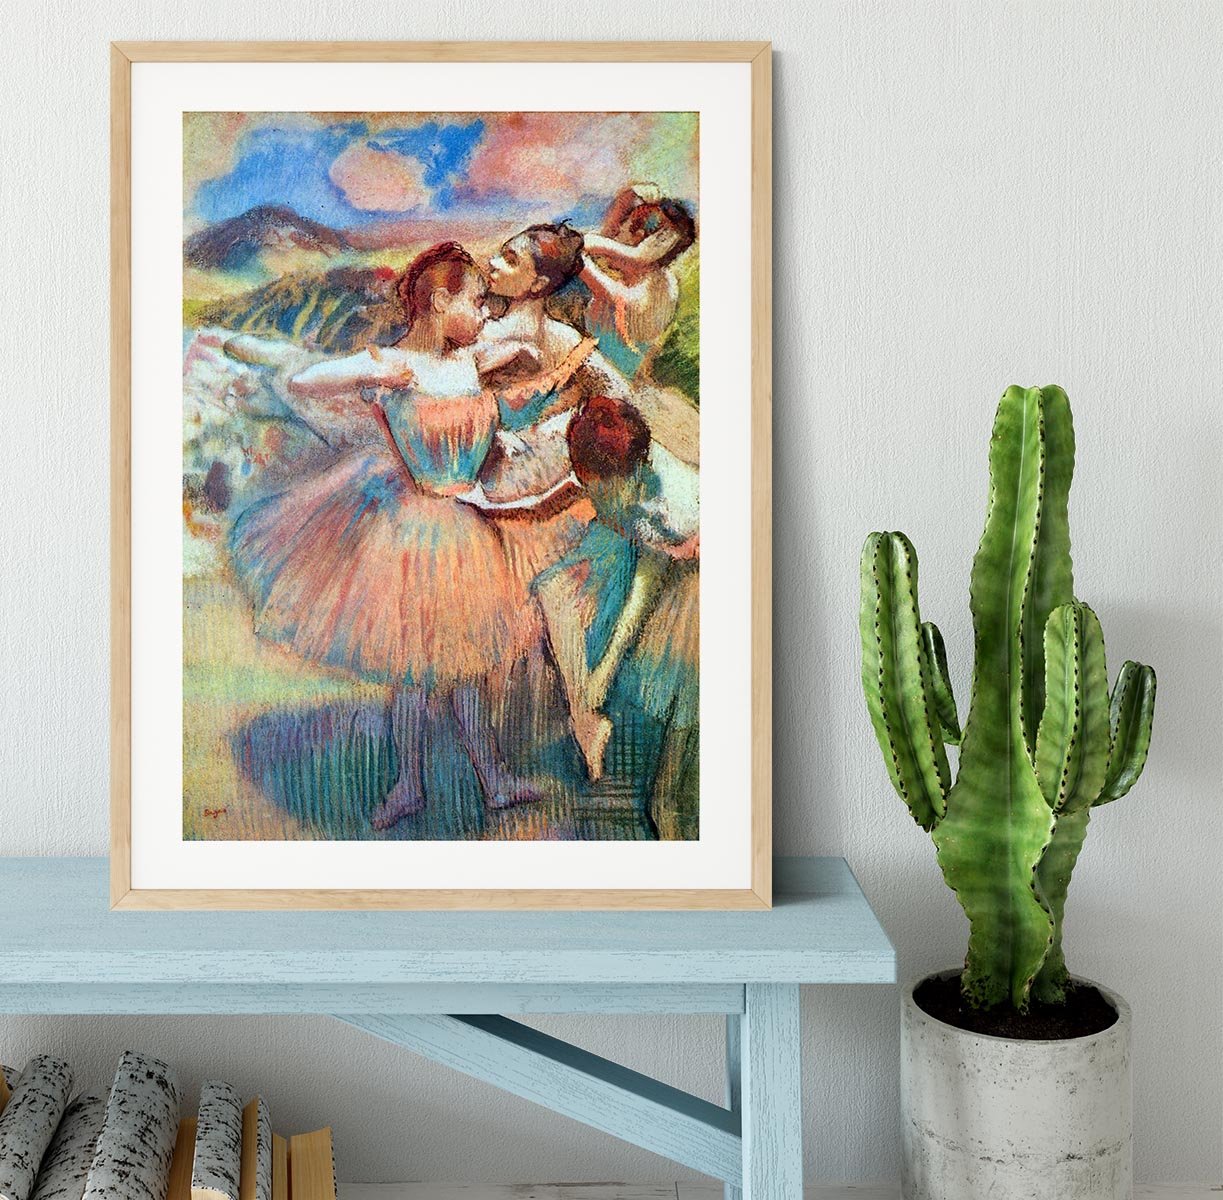 Dancers in the landscape by Degas Framed Print - Canvas Art Rocks - 3